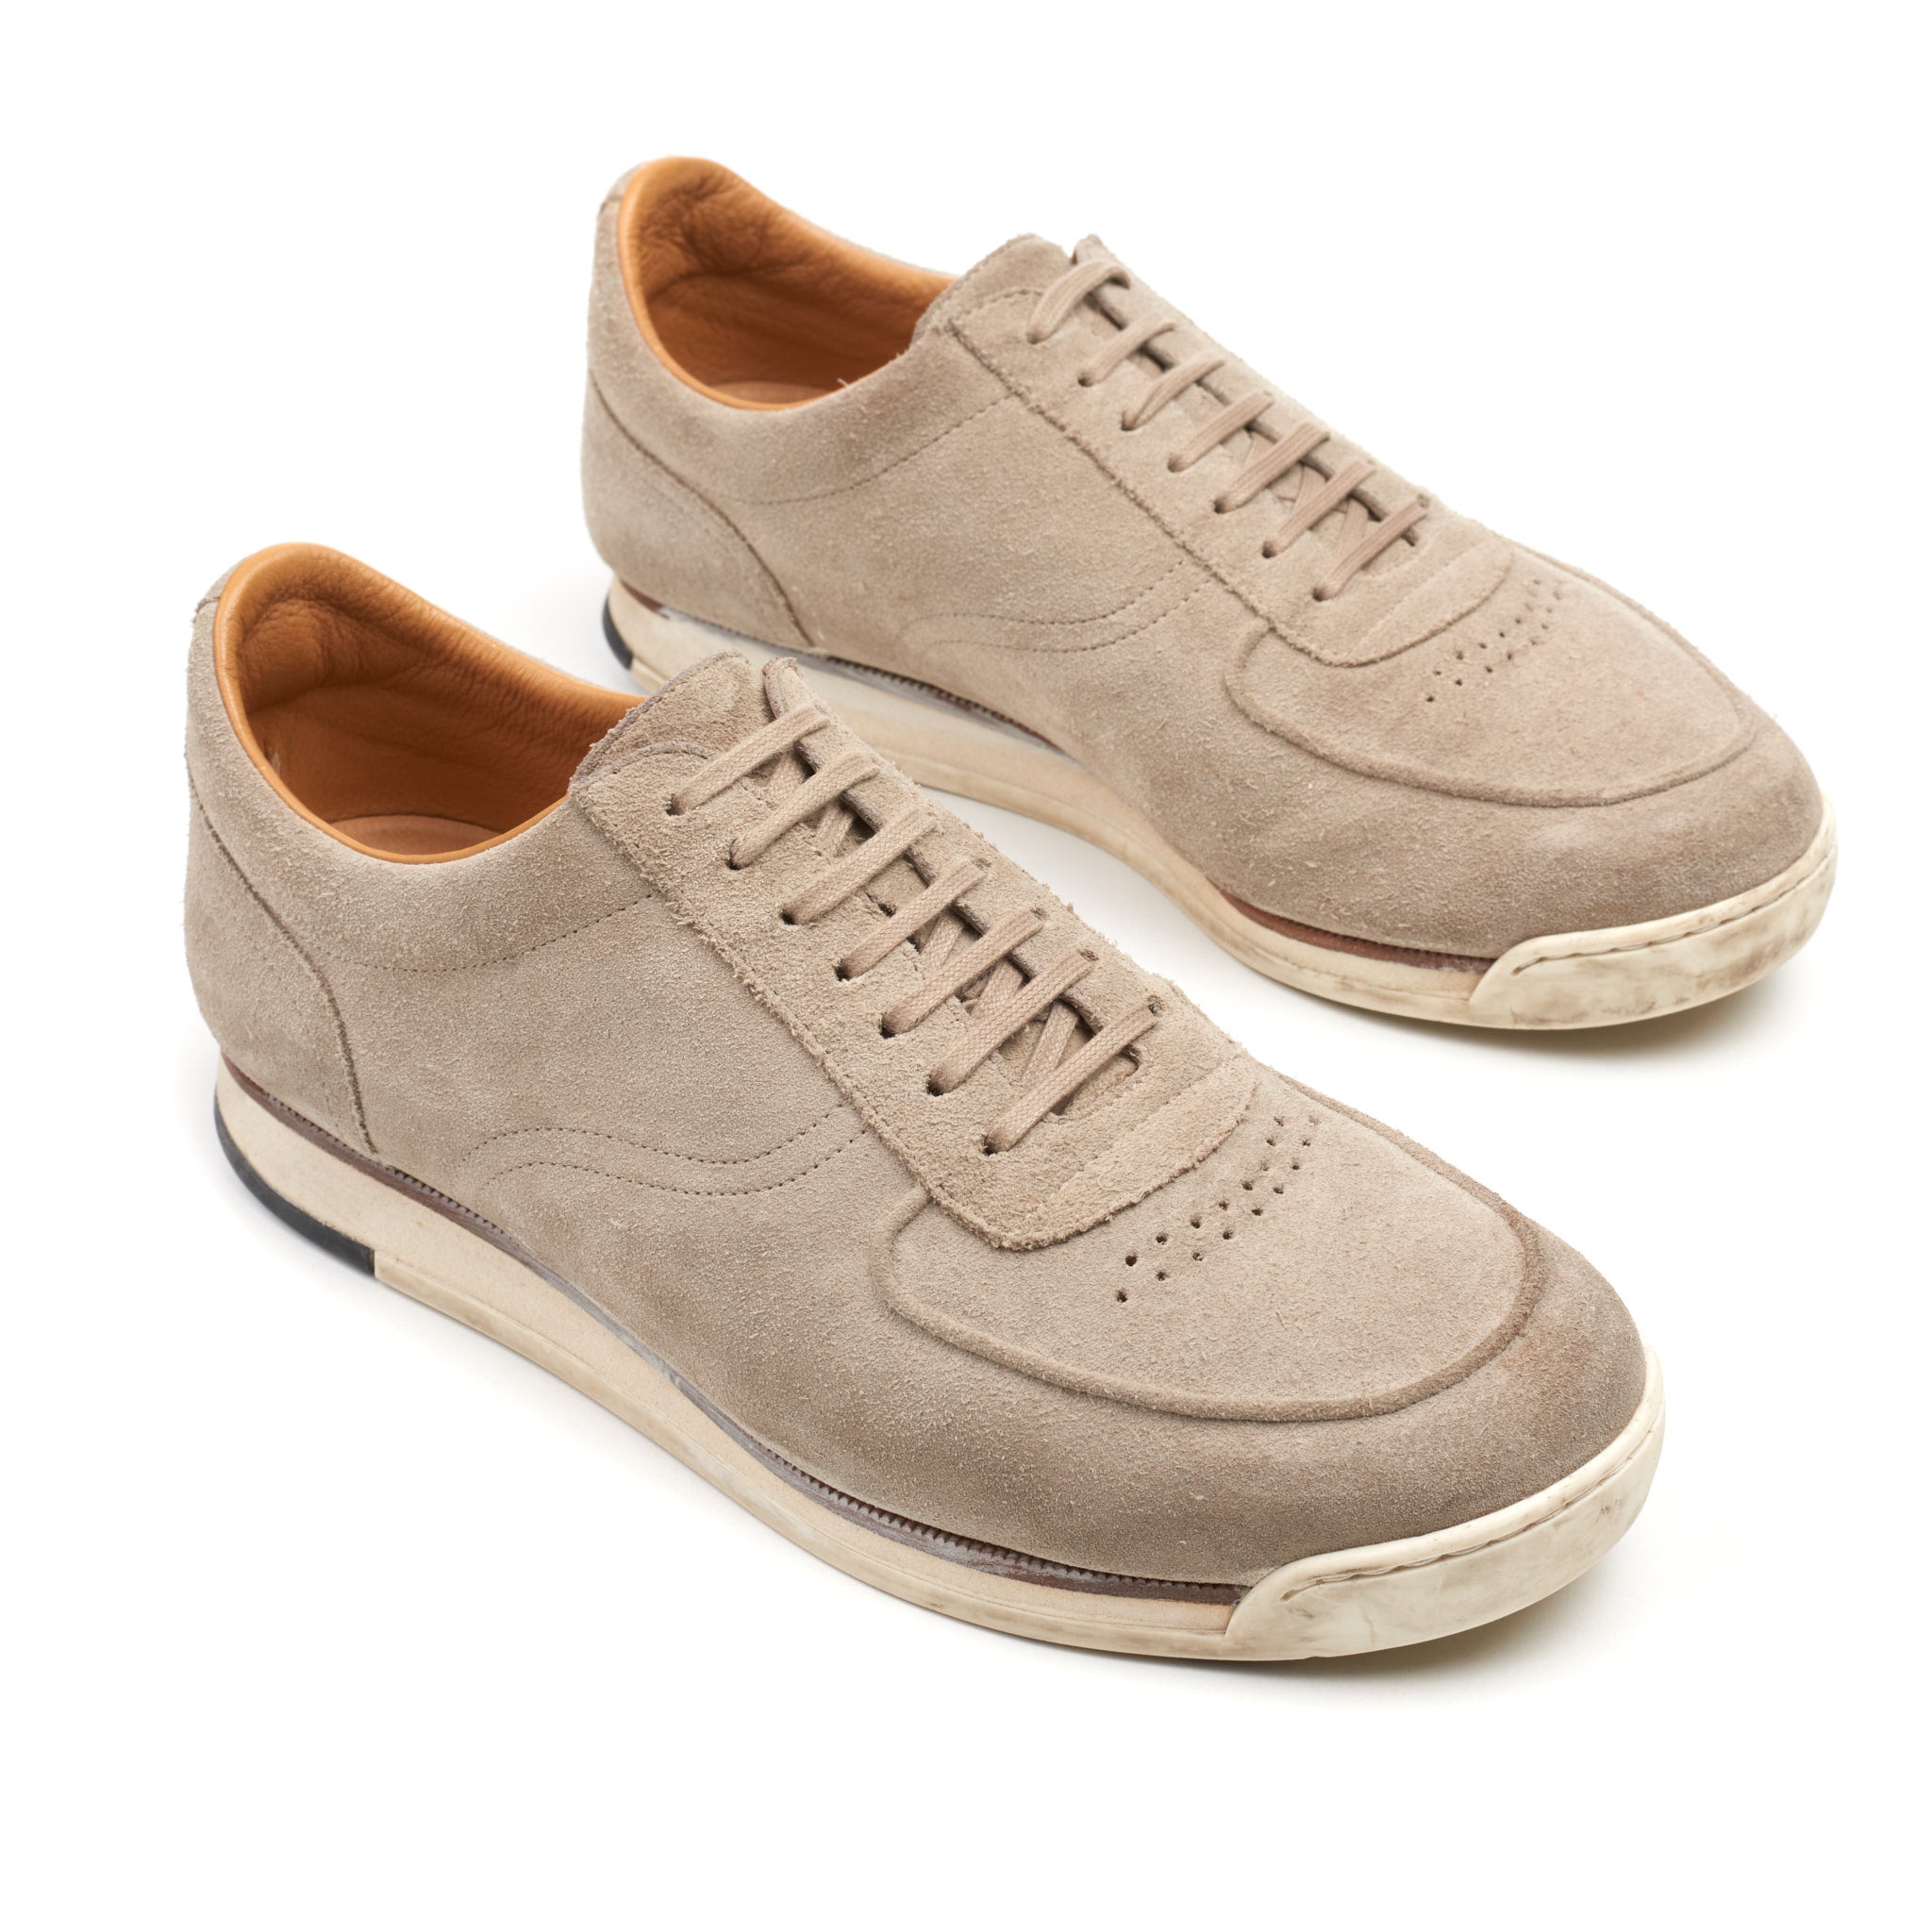 JOHN LOBB "Porth" Light Gray Suede Leather Lace-up Sneakers Shoes UK 7.5 US 8.5 JOHN LOBB